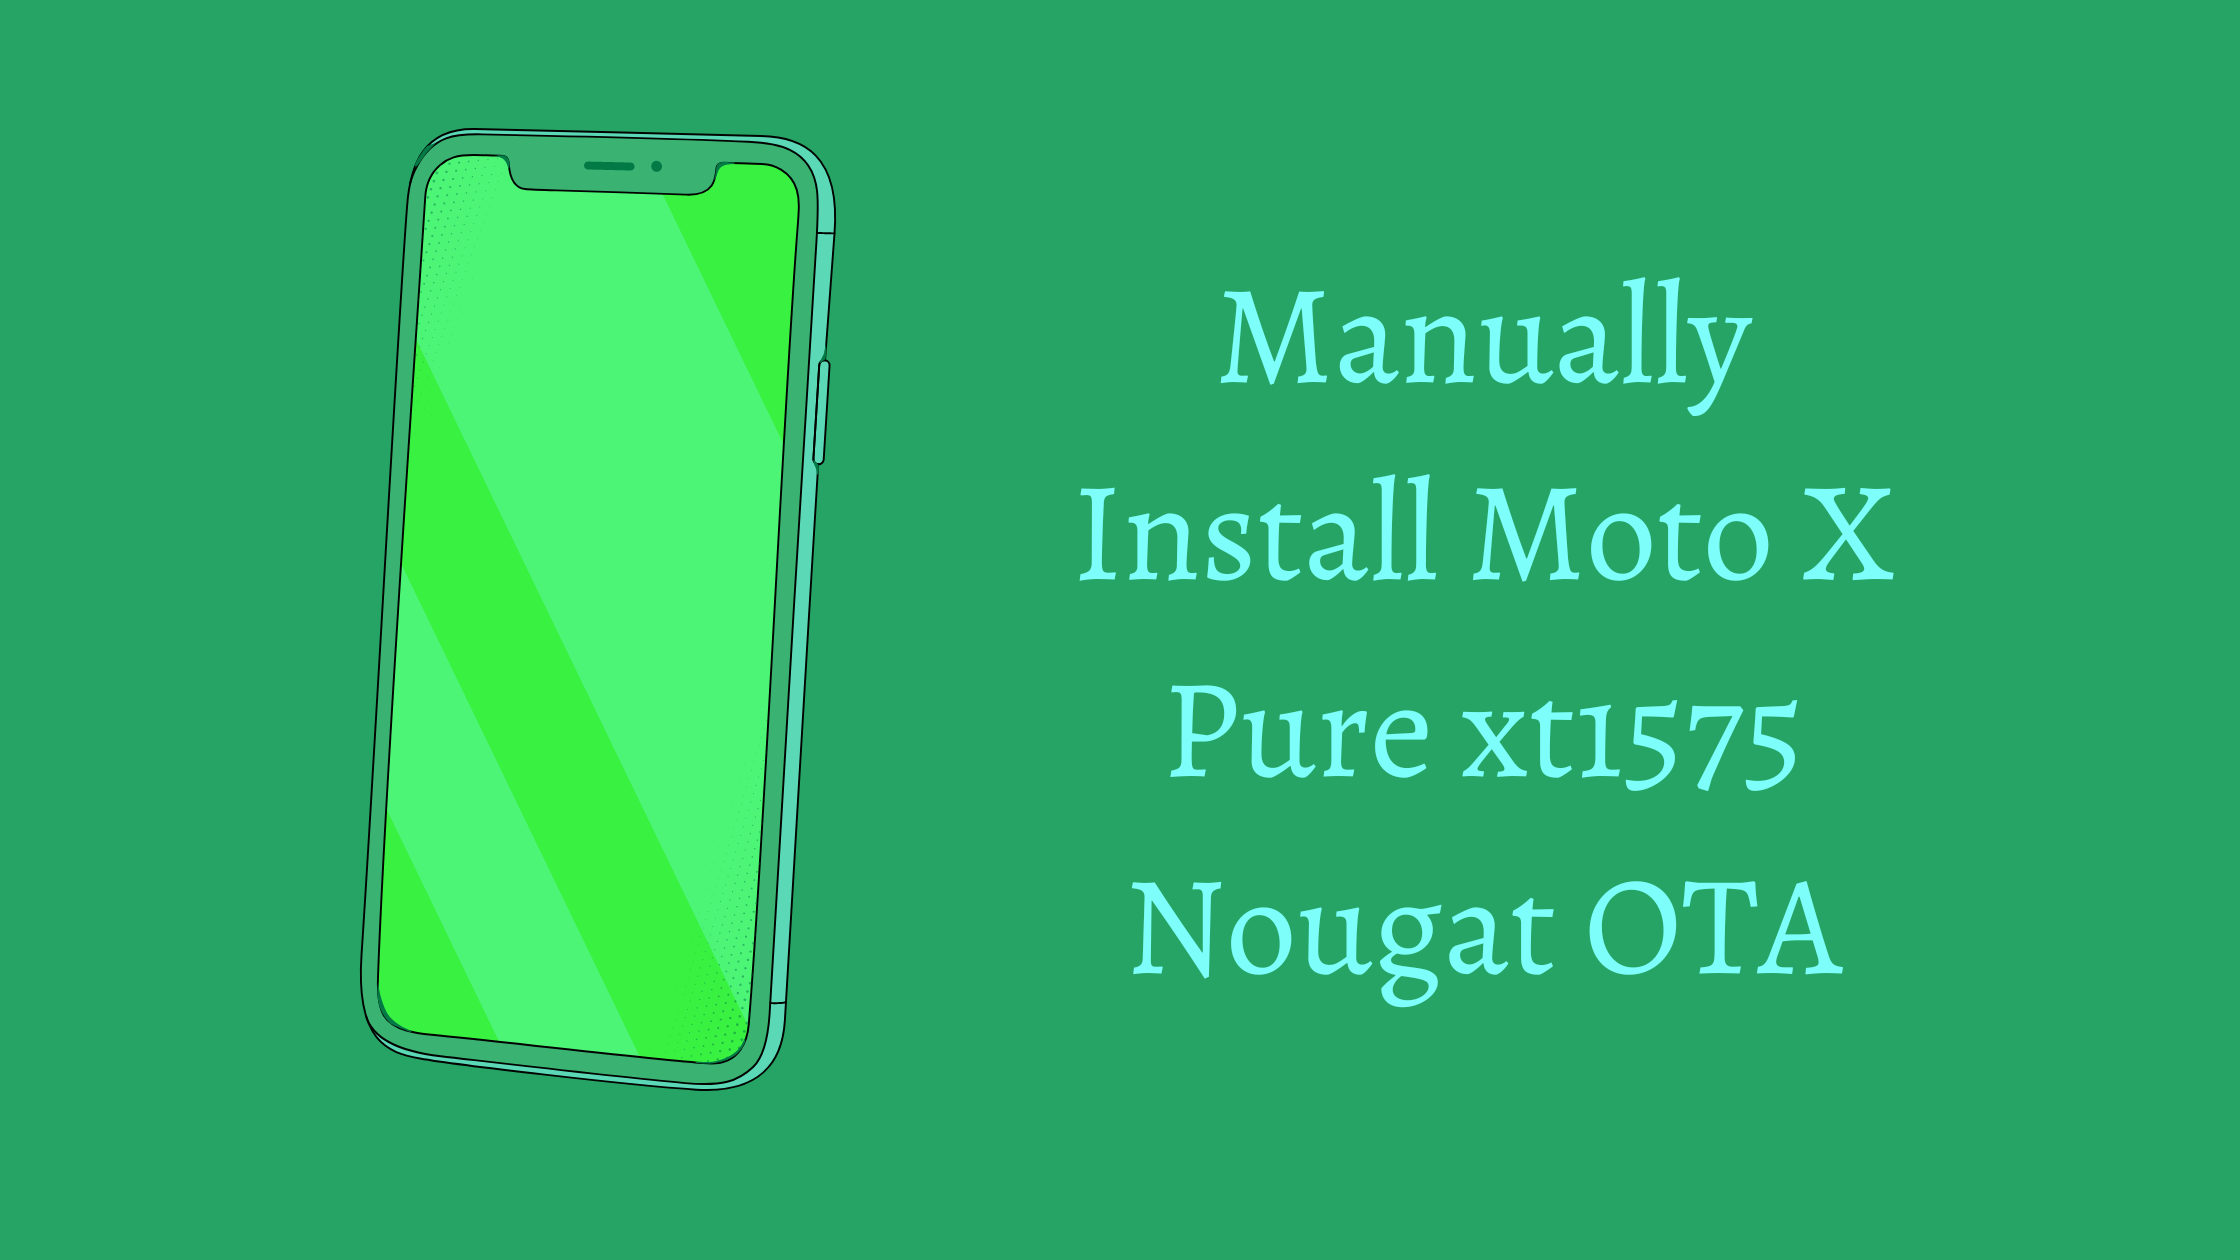 Manually Install Moto X Pure xt1575 Nougat